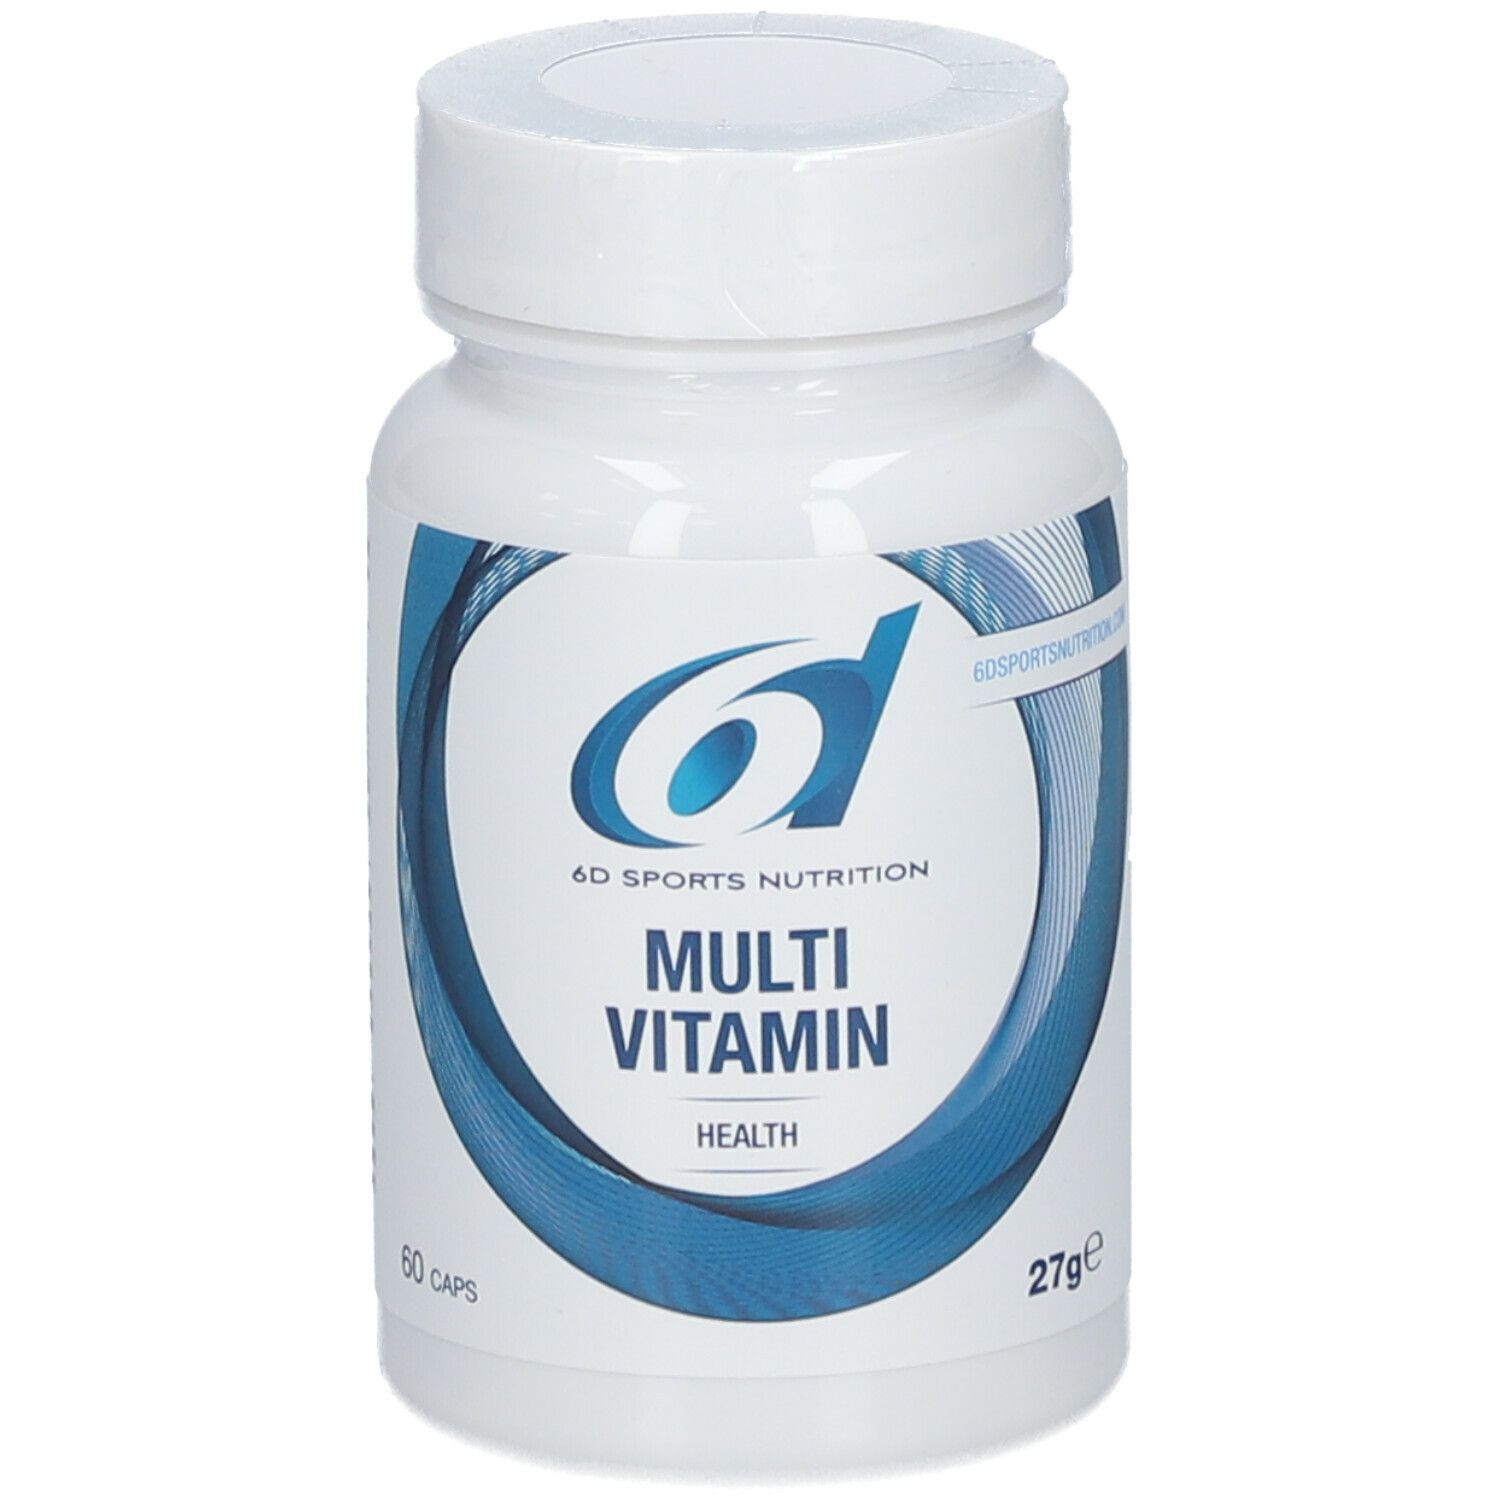 6D Sports Nutrition Multi Vitamin